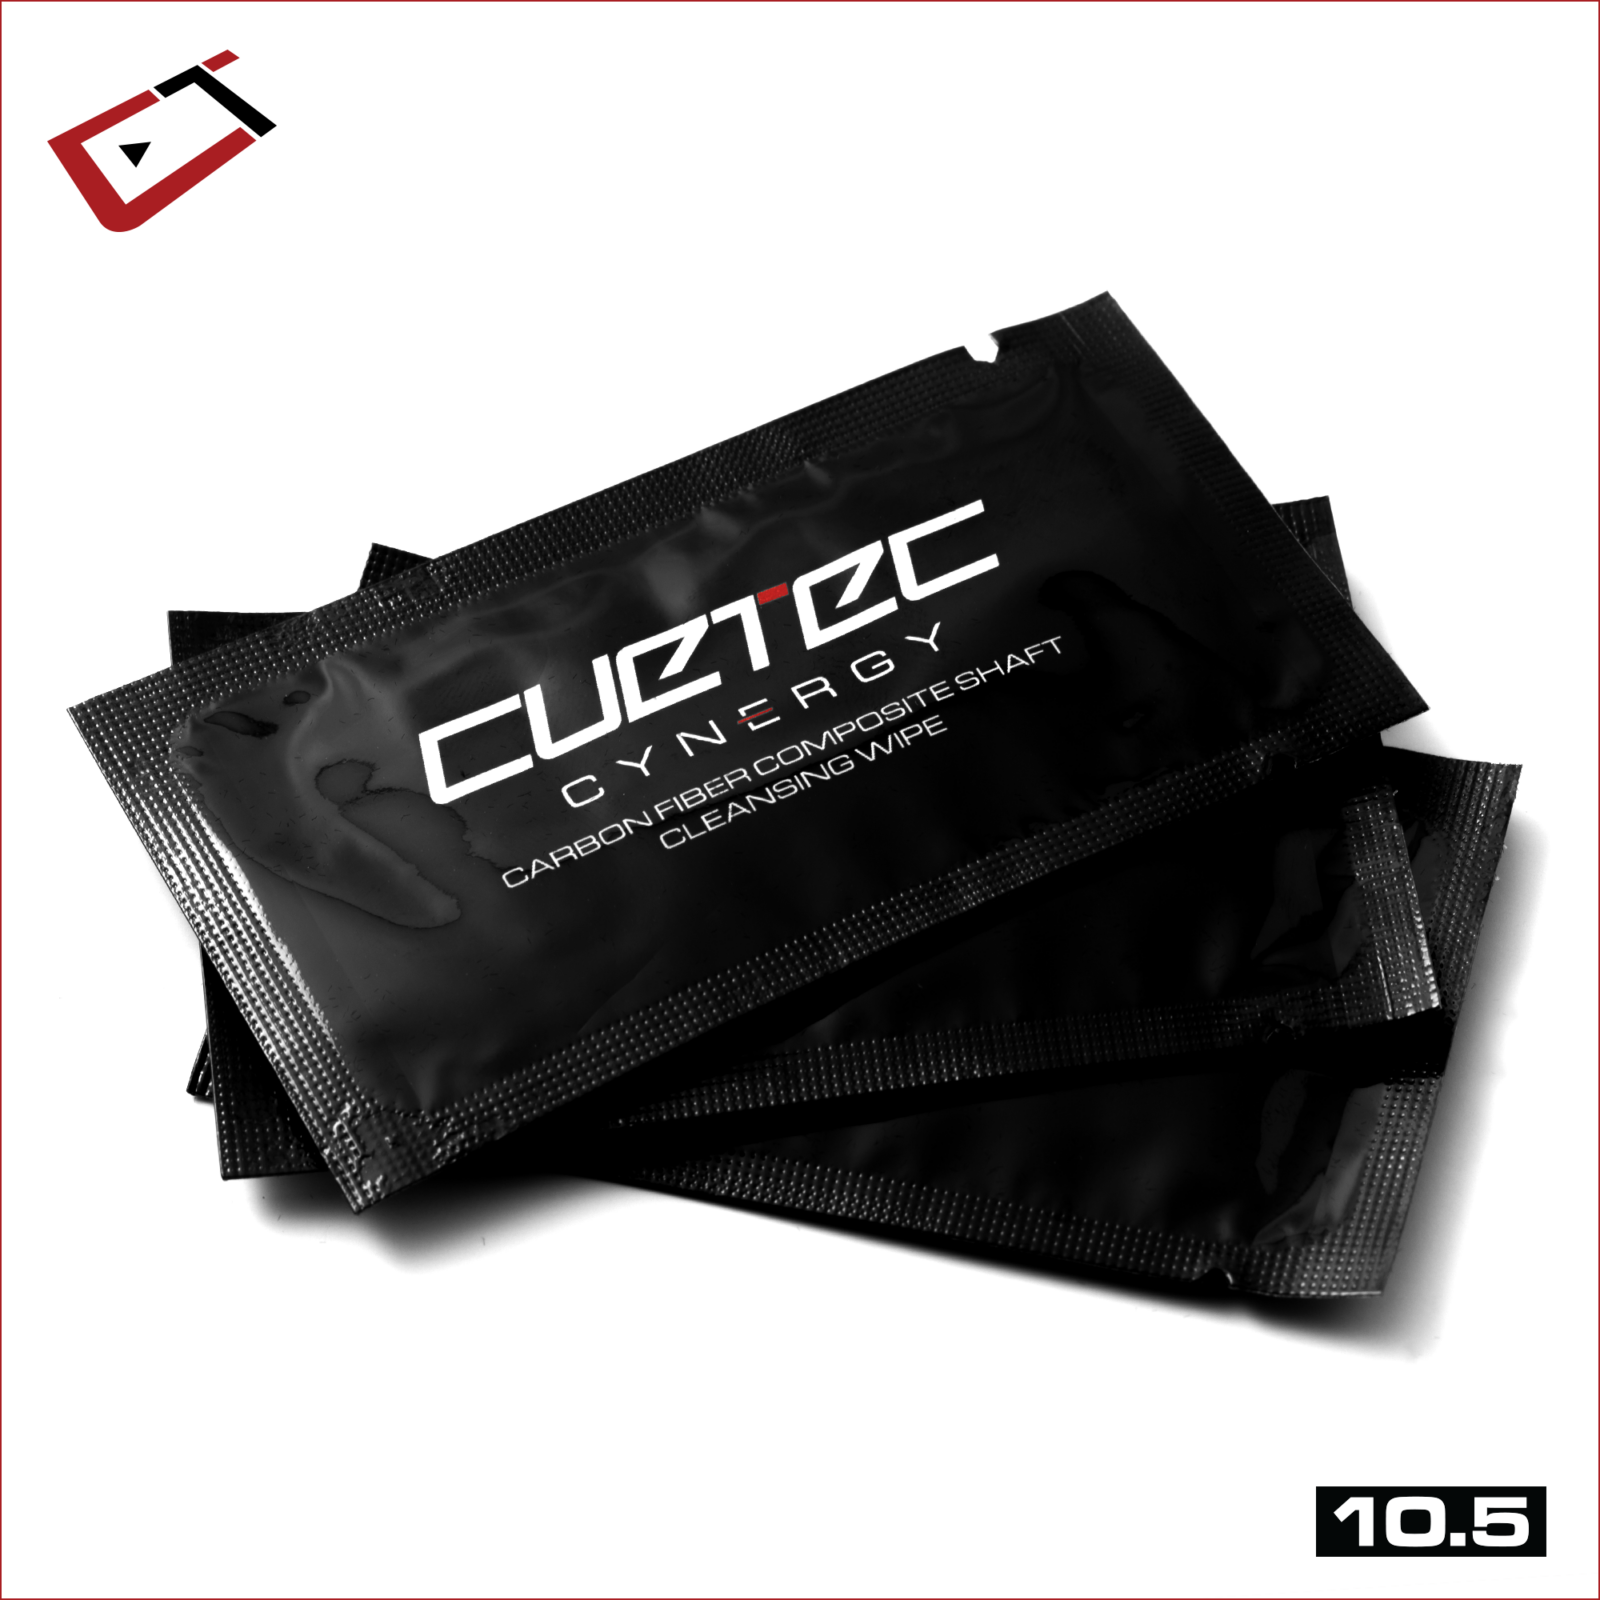 Cuetec Cynergy Shaft 10.5mm 5/16x18 95-023T Wipes